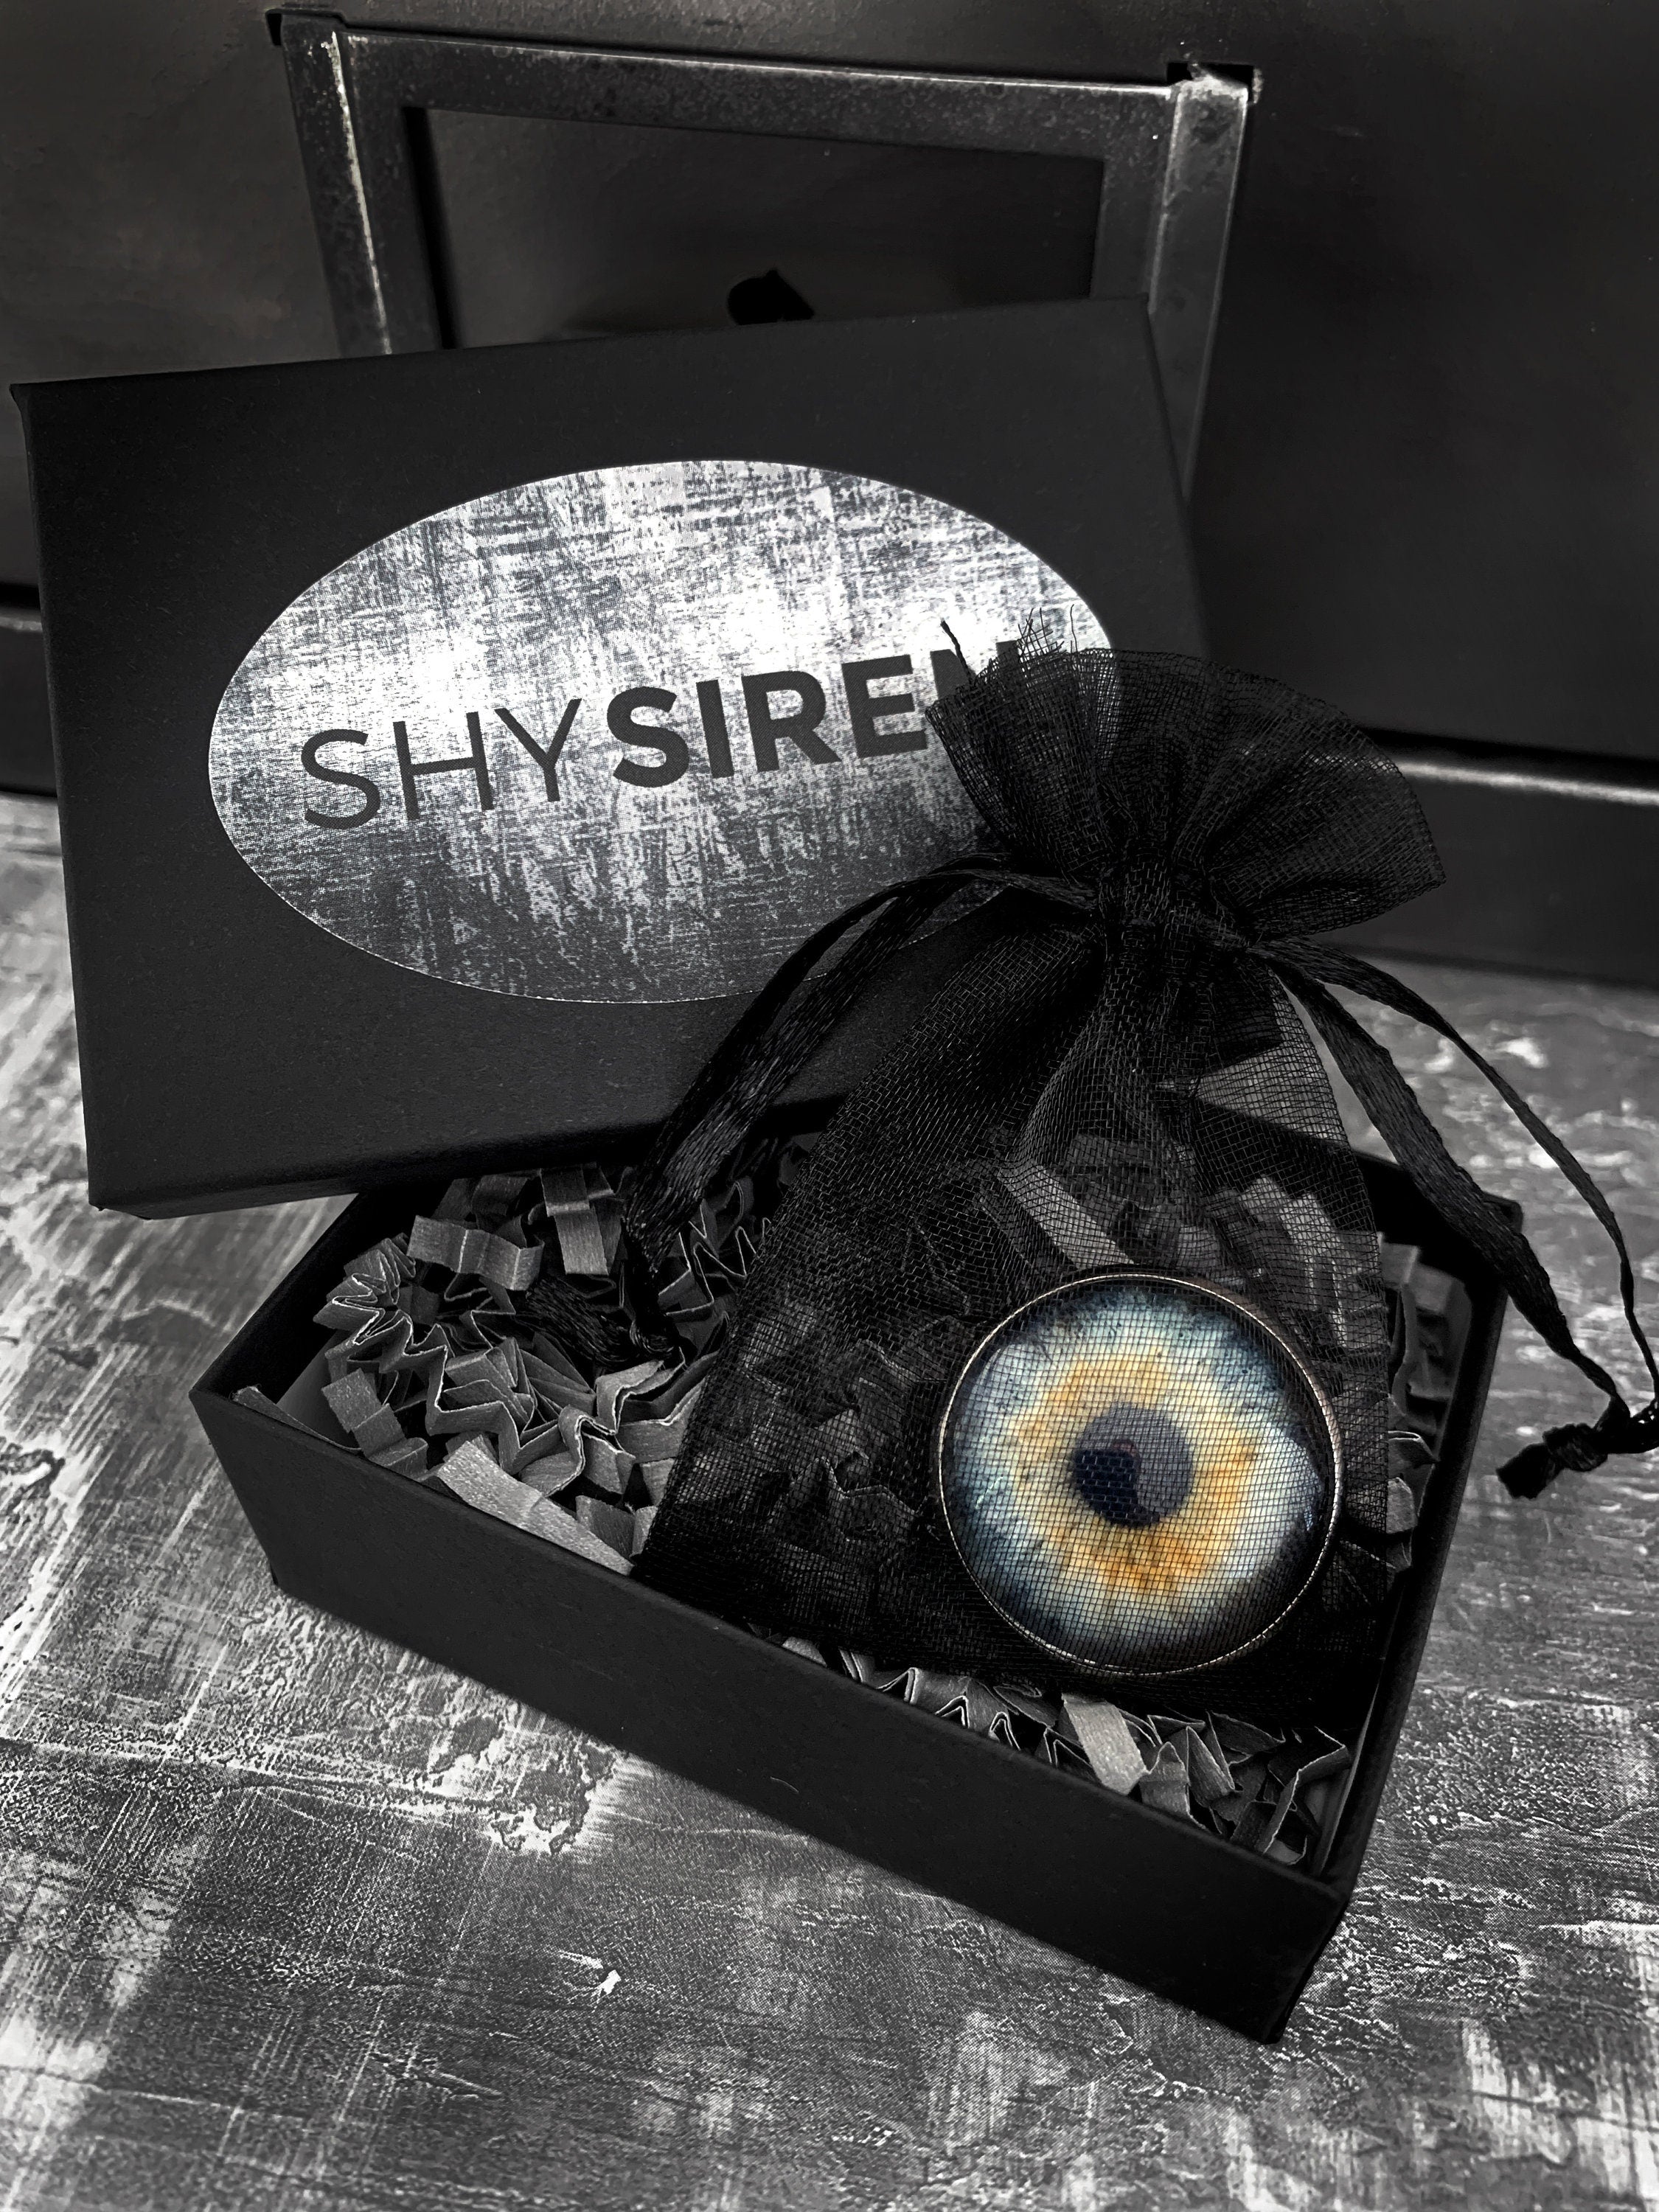 Blue Eyeball Ring w Brown Flecks - 2 Sizes - Realistic Eye Ring, Evil Eye Ring, Adjustable Black Ring Band - Goth Halloween Gift for Teen